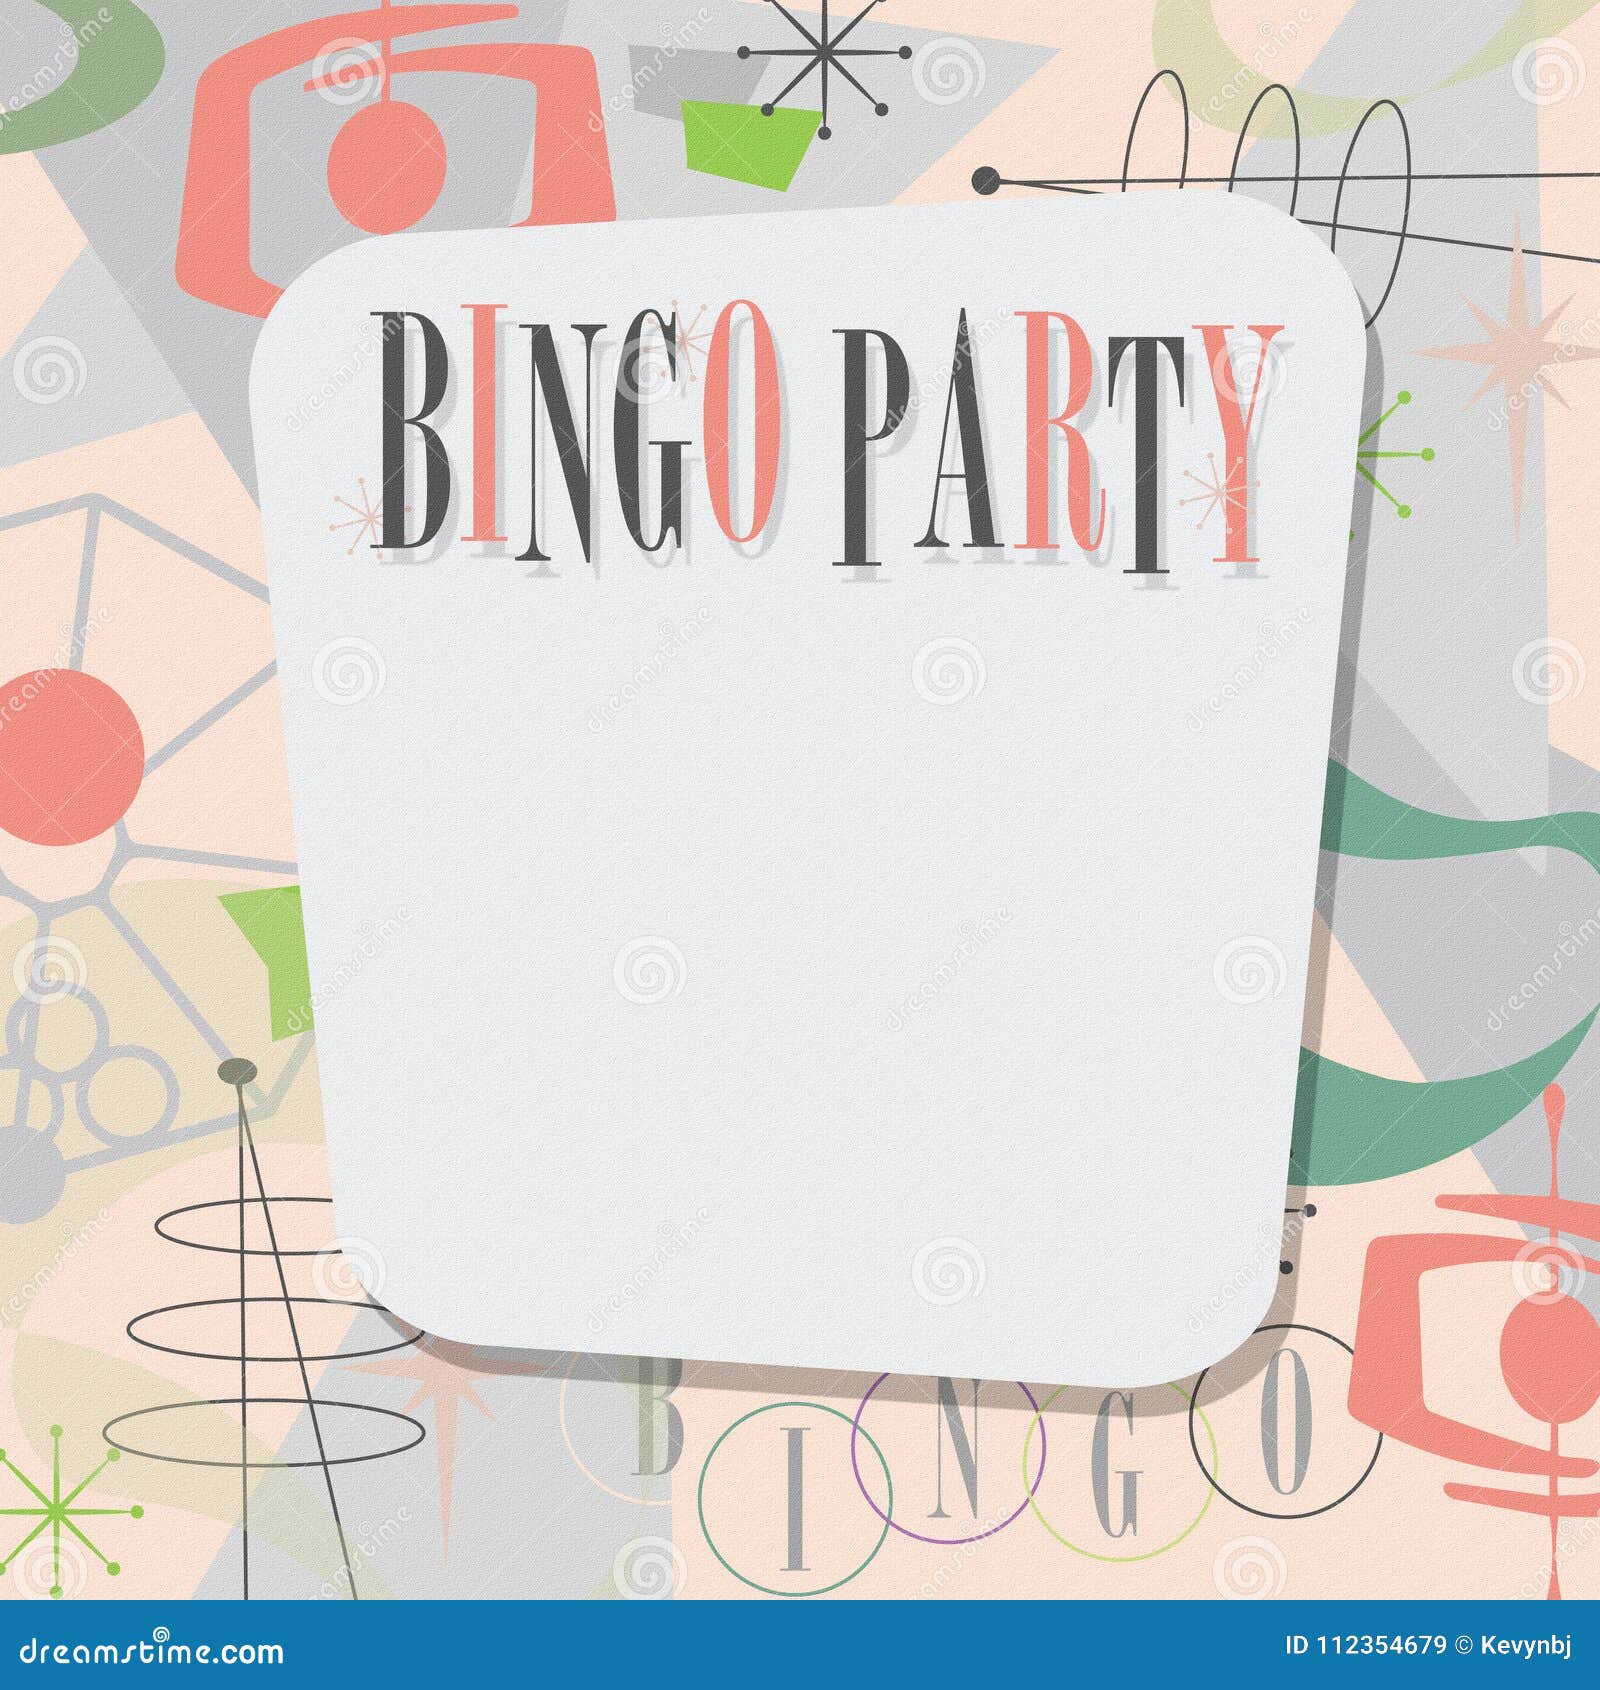 bingo party invitation mid century modern cool